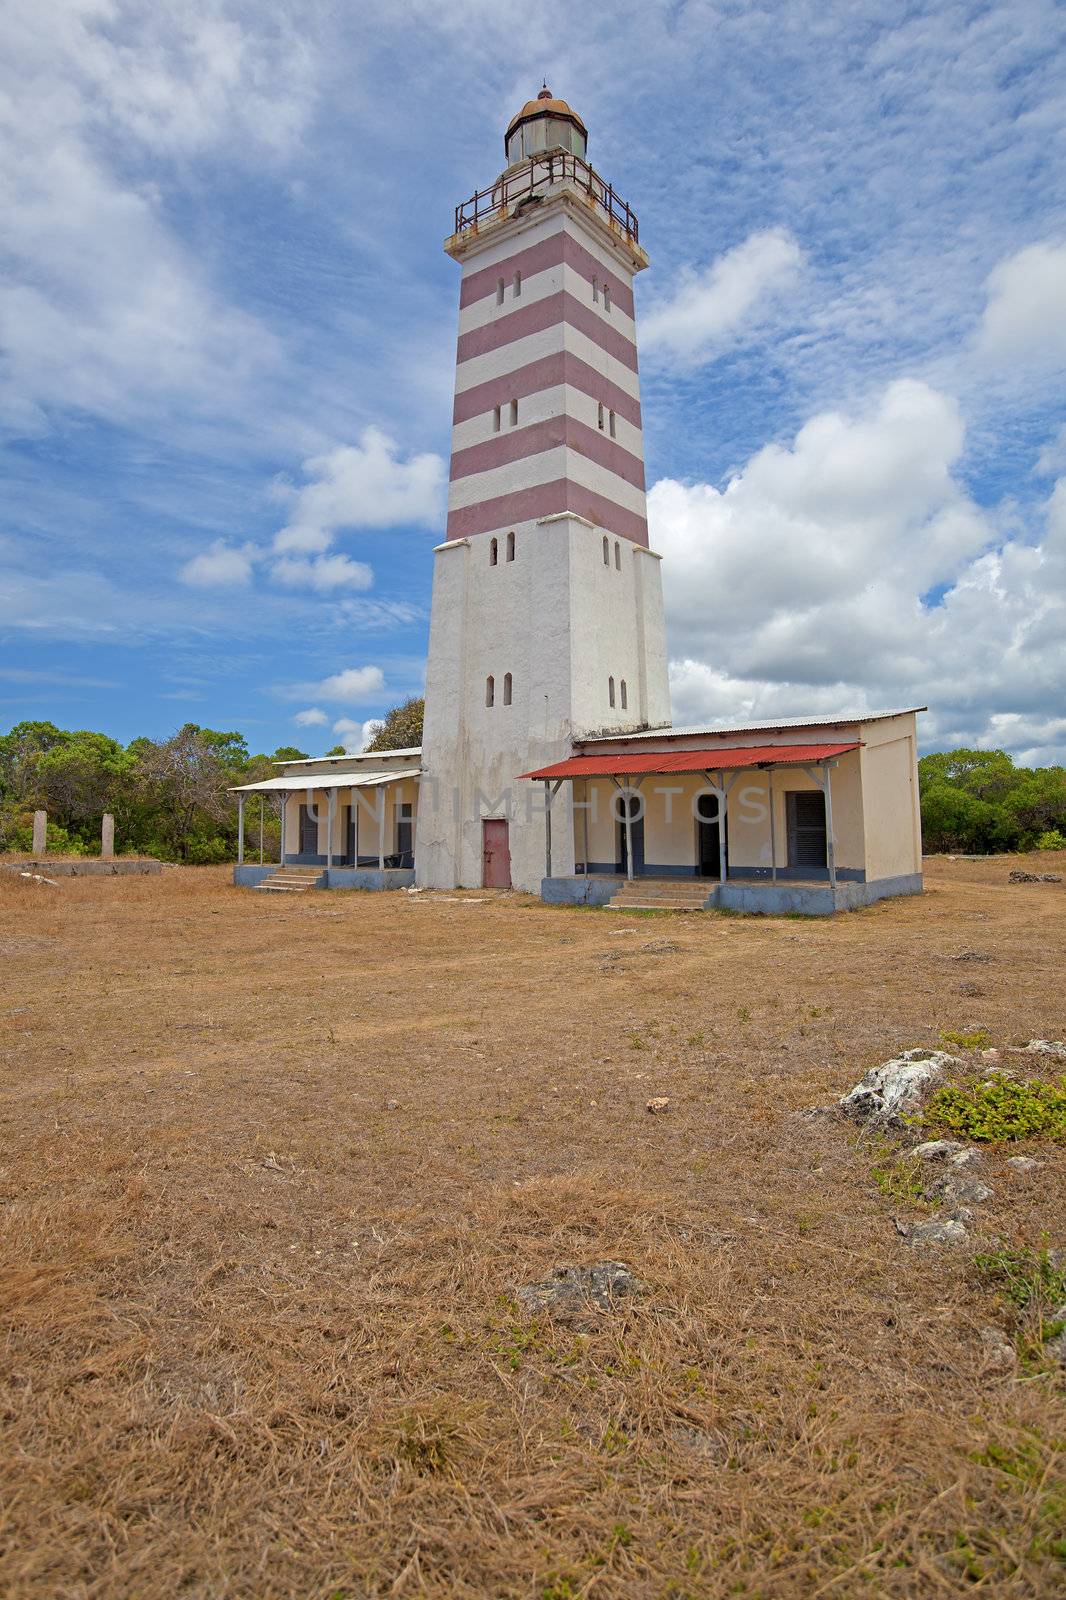 Mafia island lighthouse by kjorgen